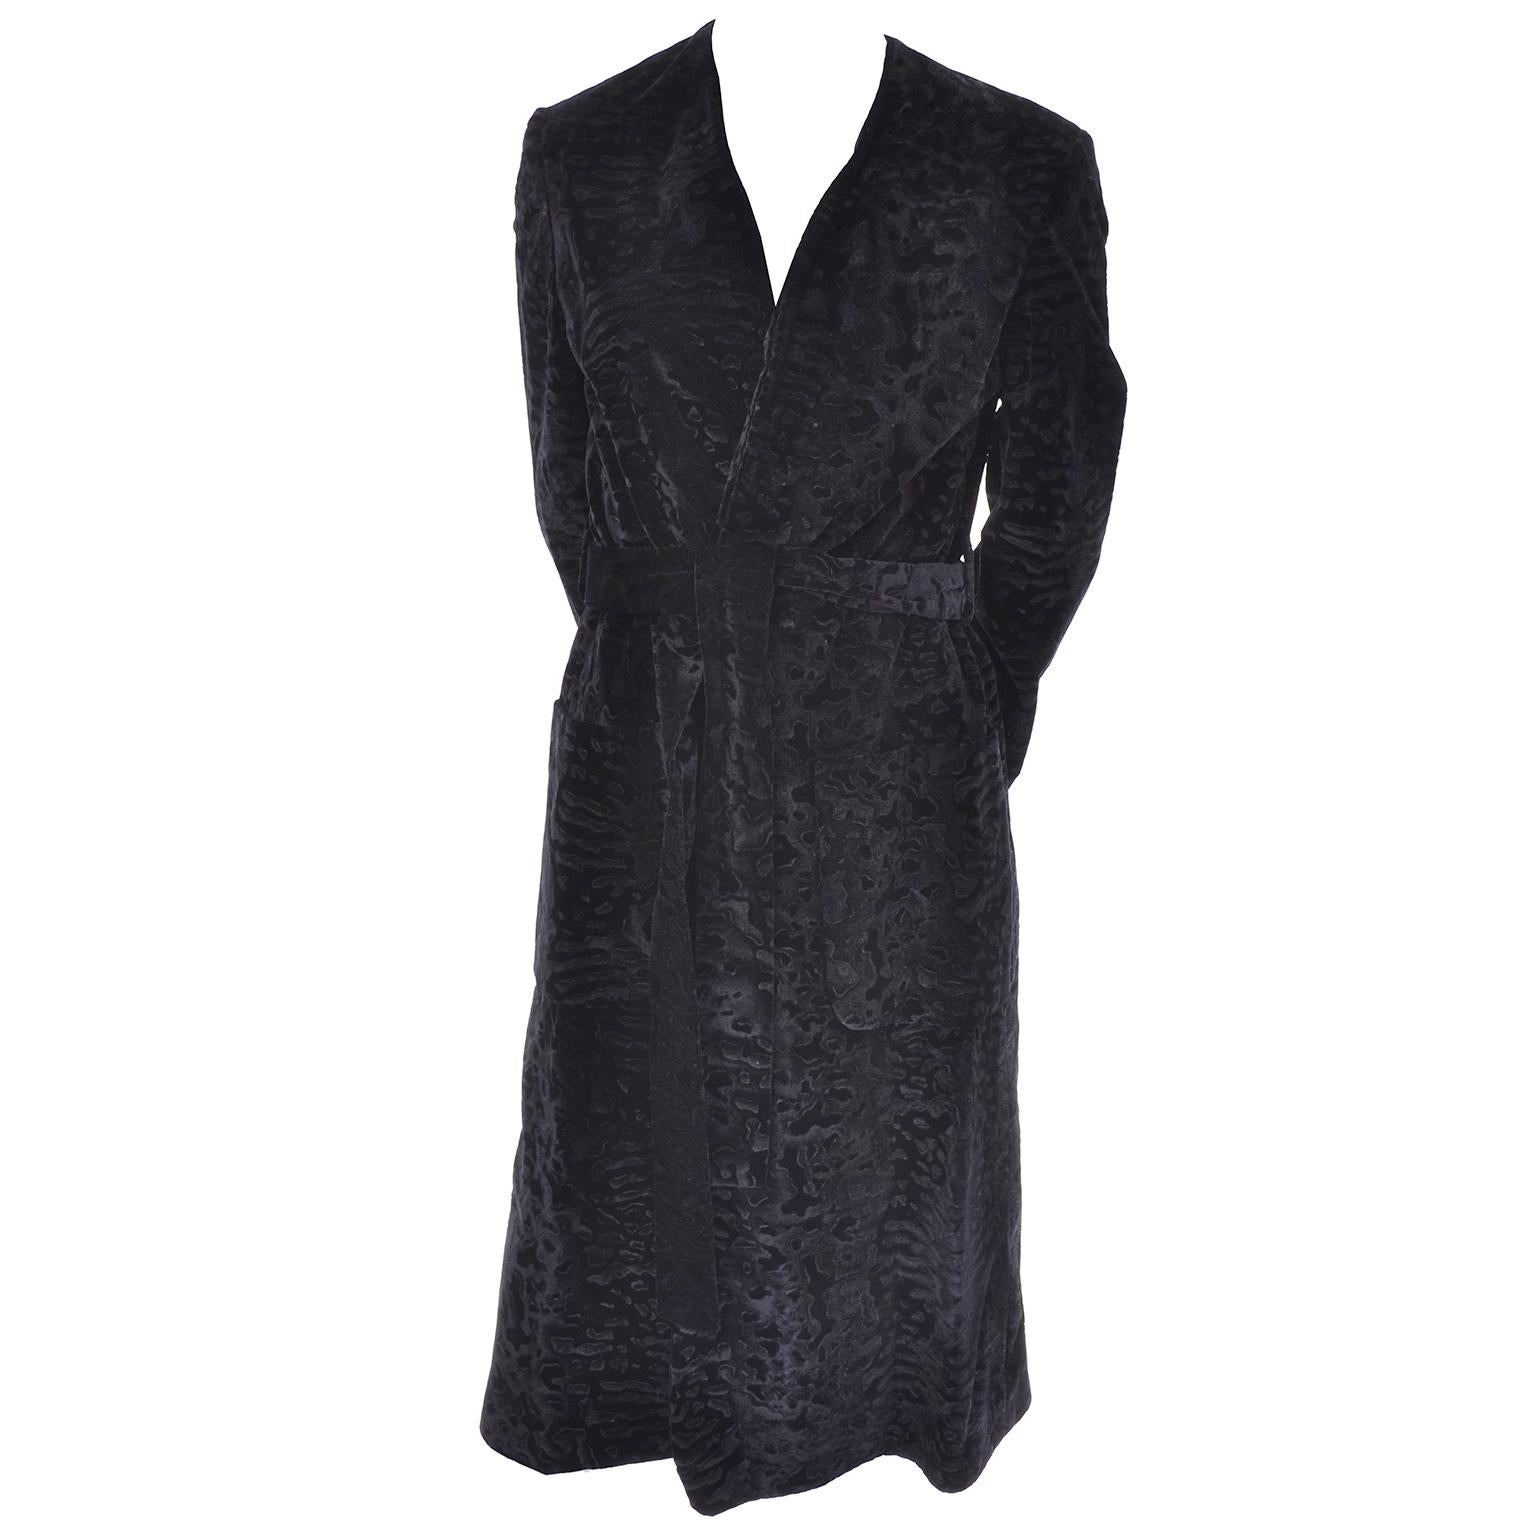 Bill Blass Vintage Coat in Black Flocked Velvet With Pockets and Belt